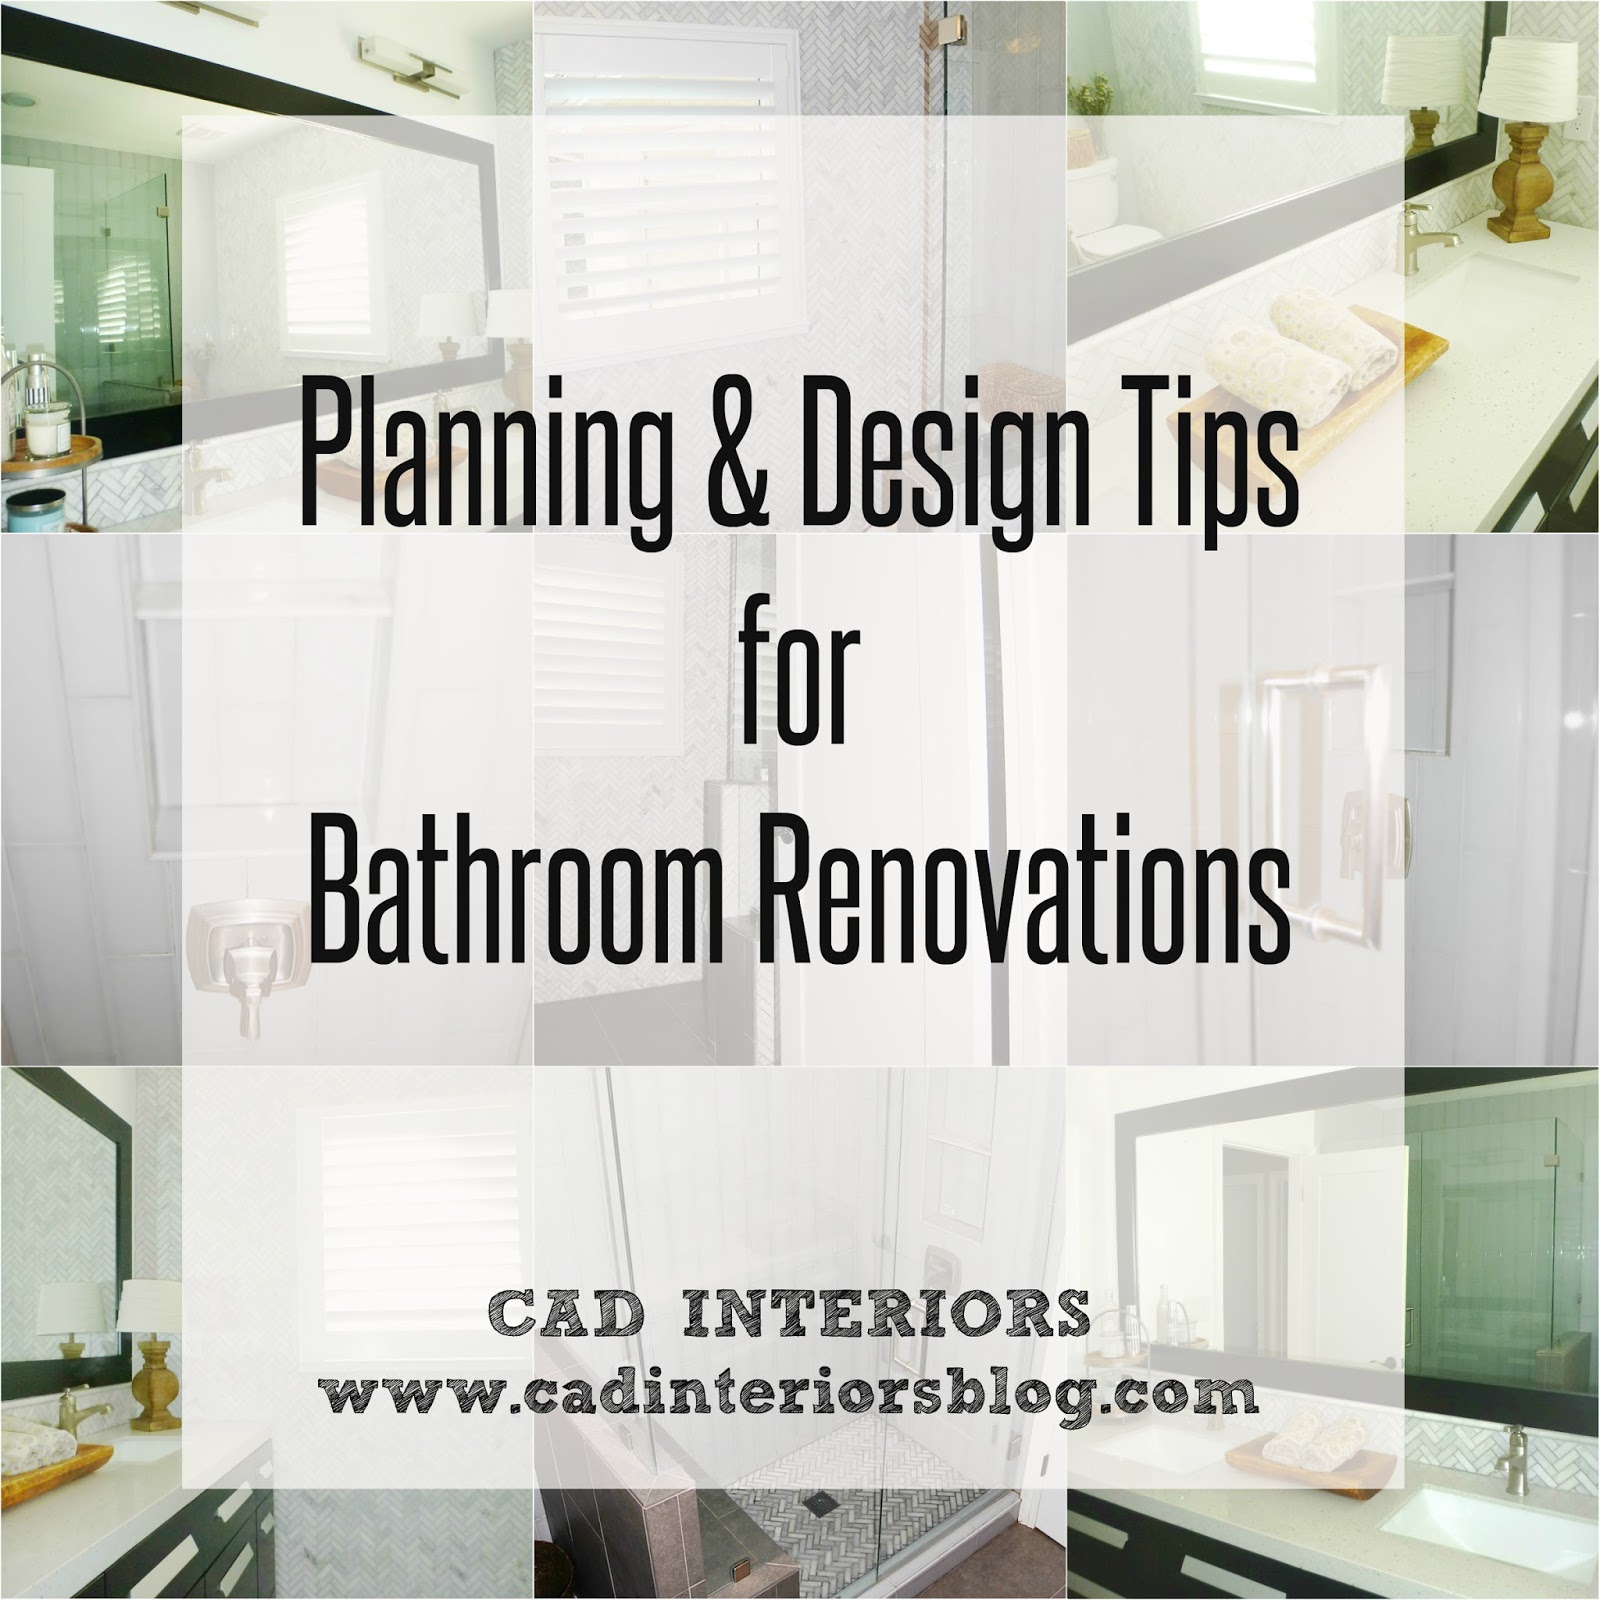 CAD INTERIORS bathroom remodel interior design modern transitional bathroom